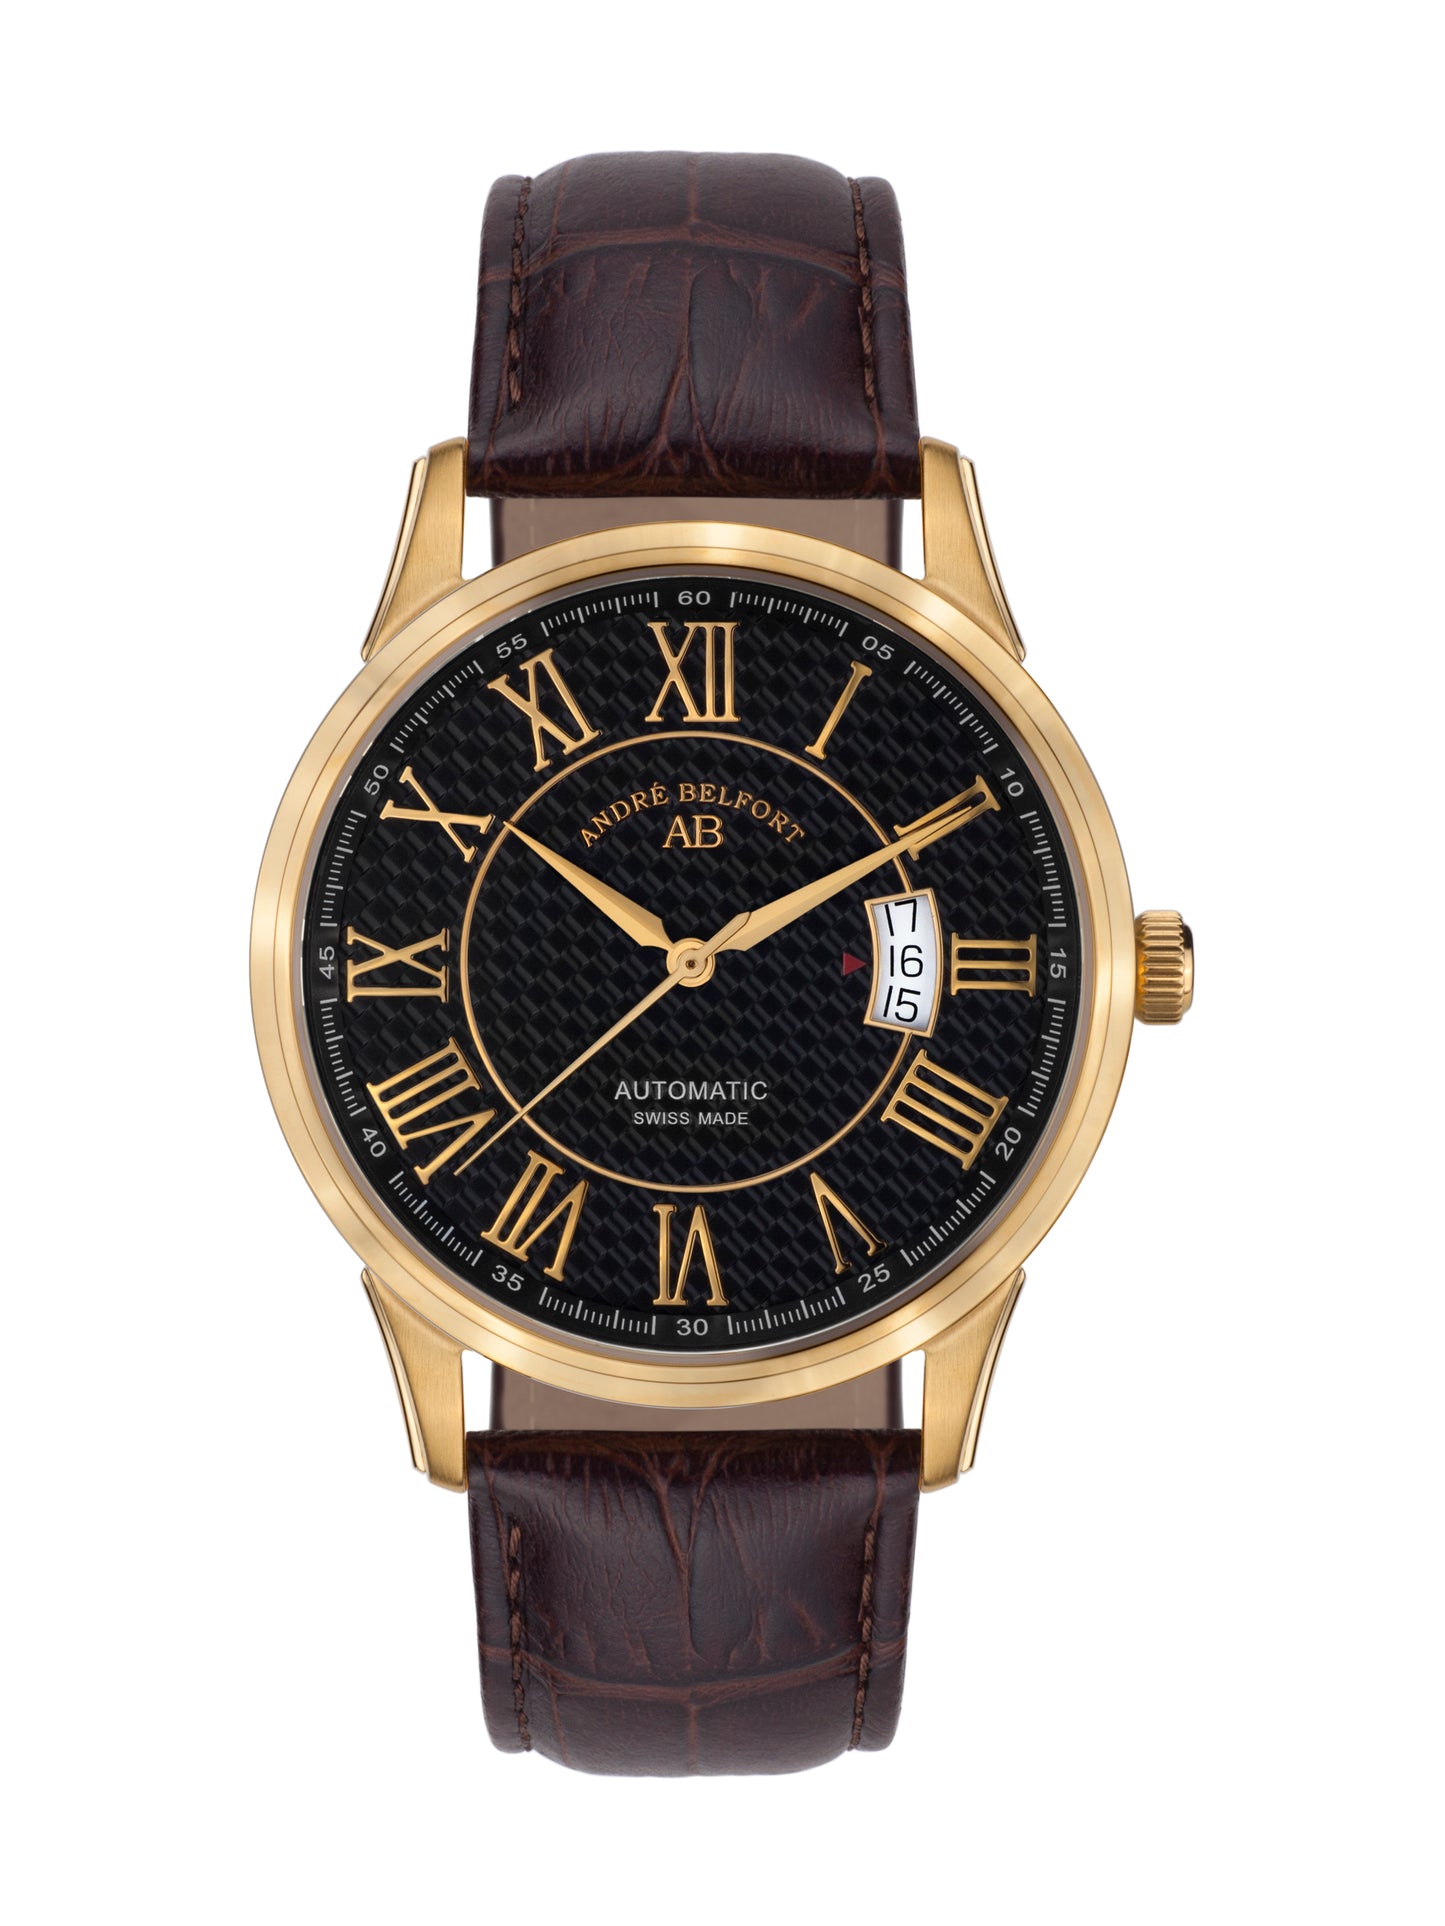 bracelet watches — leather band Le Maître — Band — black gold